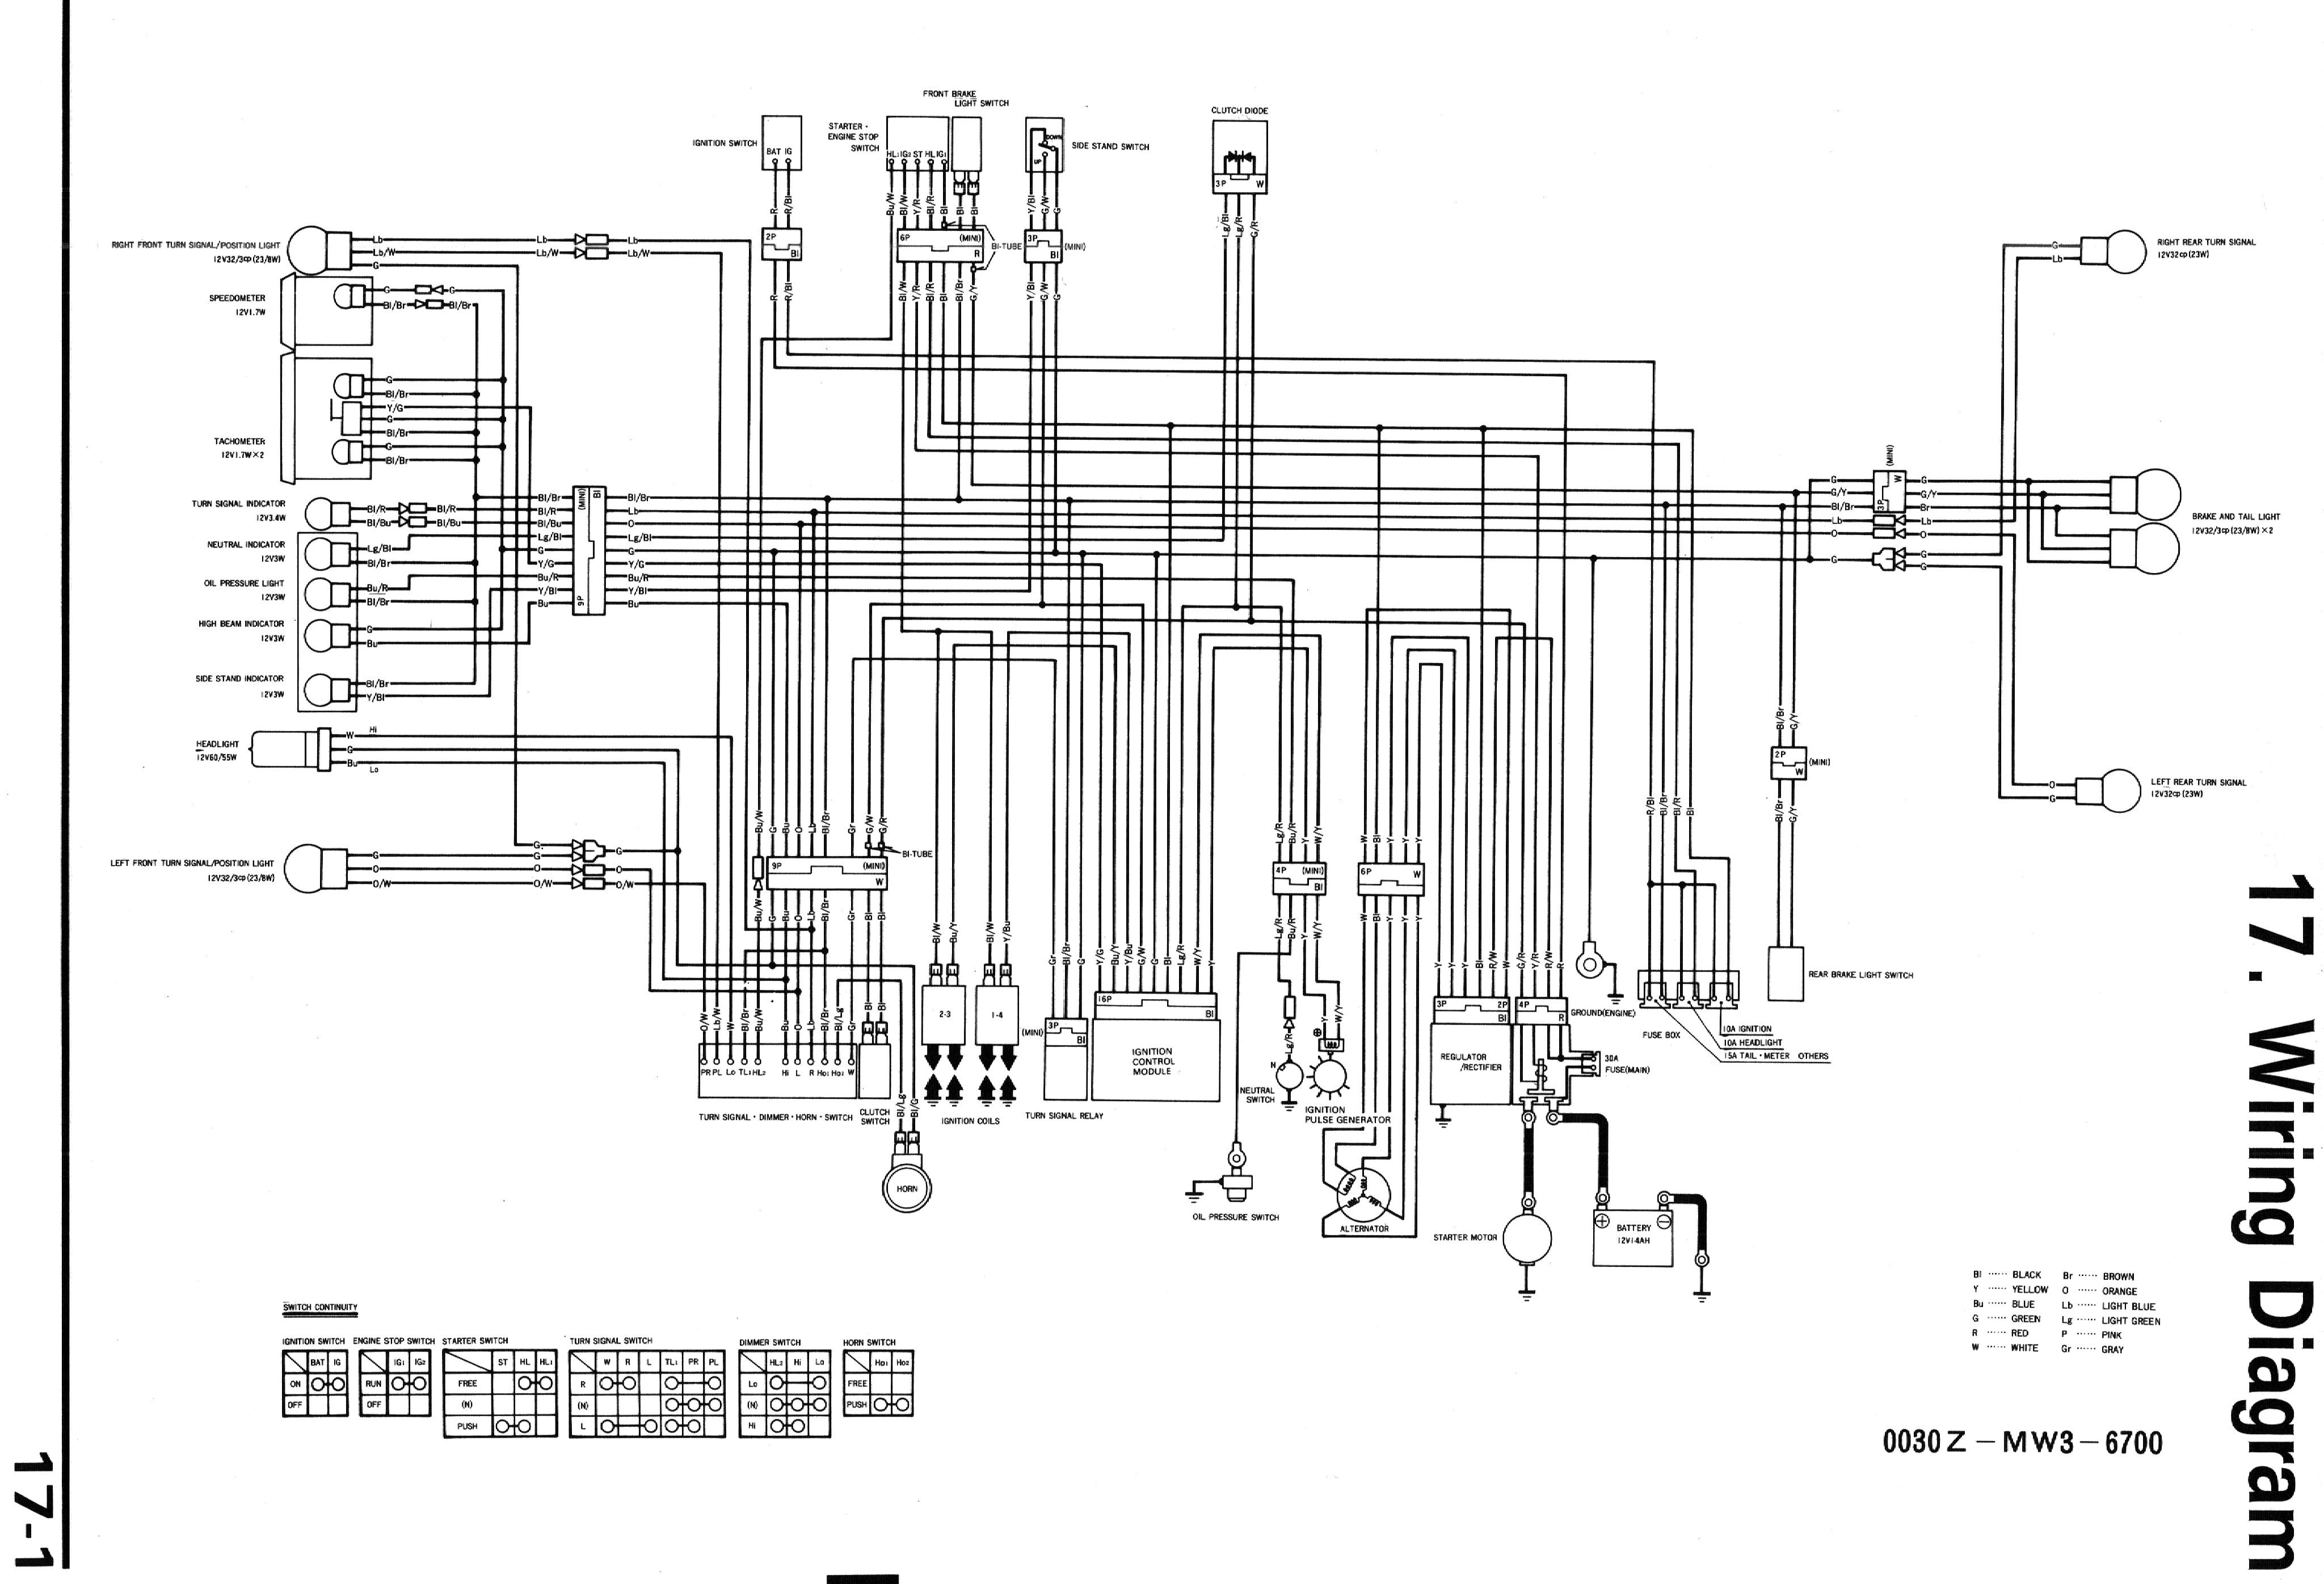 Honda Cb 250 Wiring Diagram Wiring Diagrams Of Honda Cb 250 Wiring Diagram